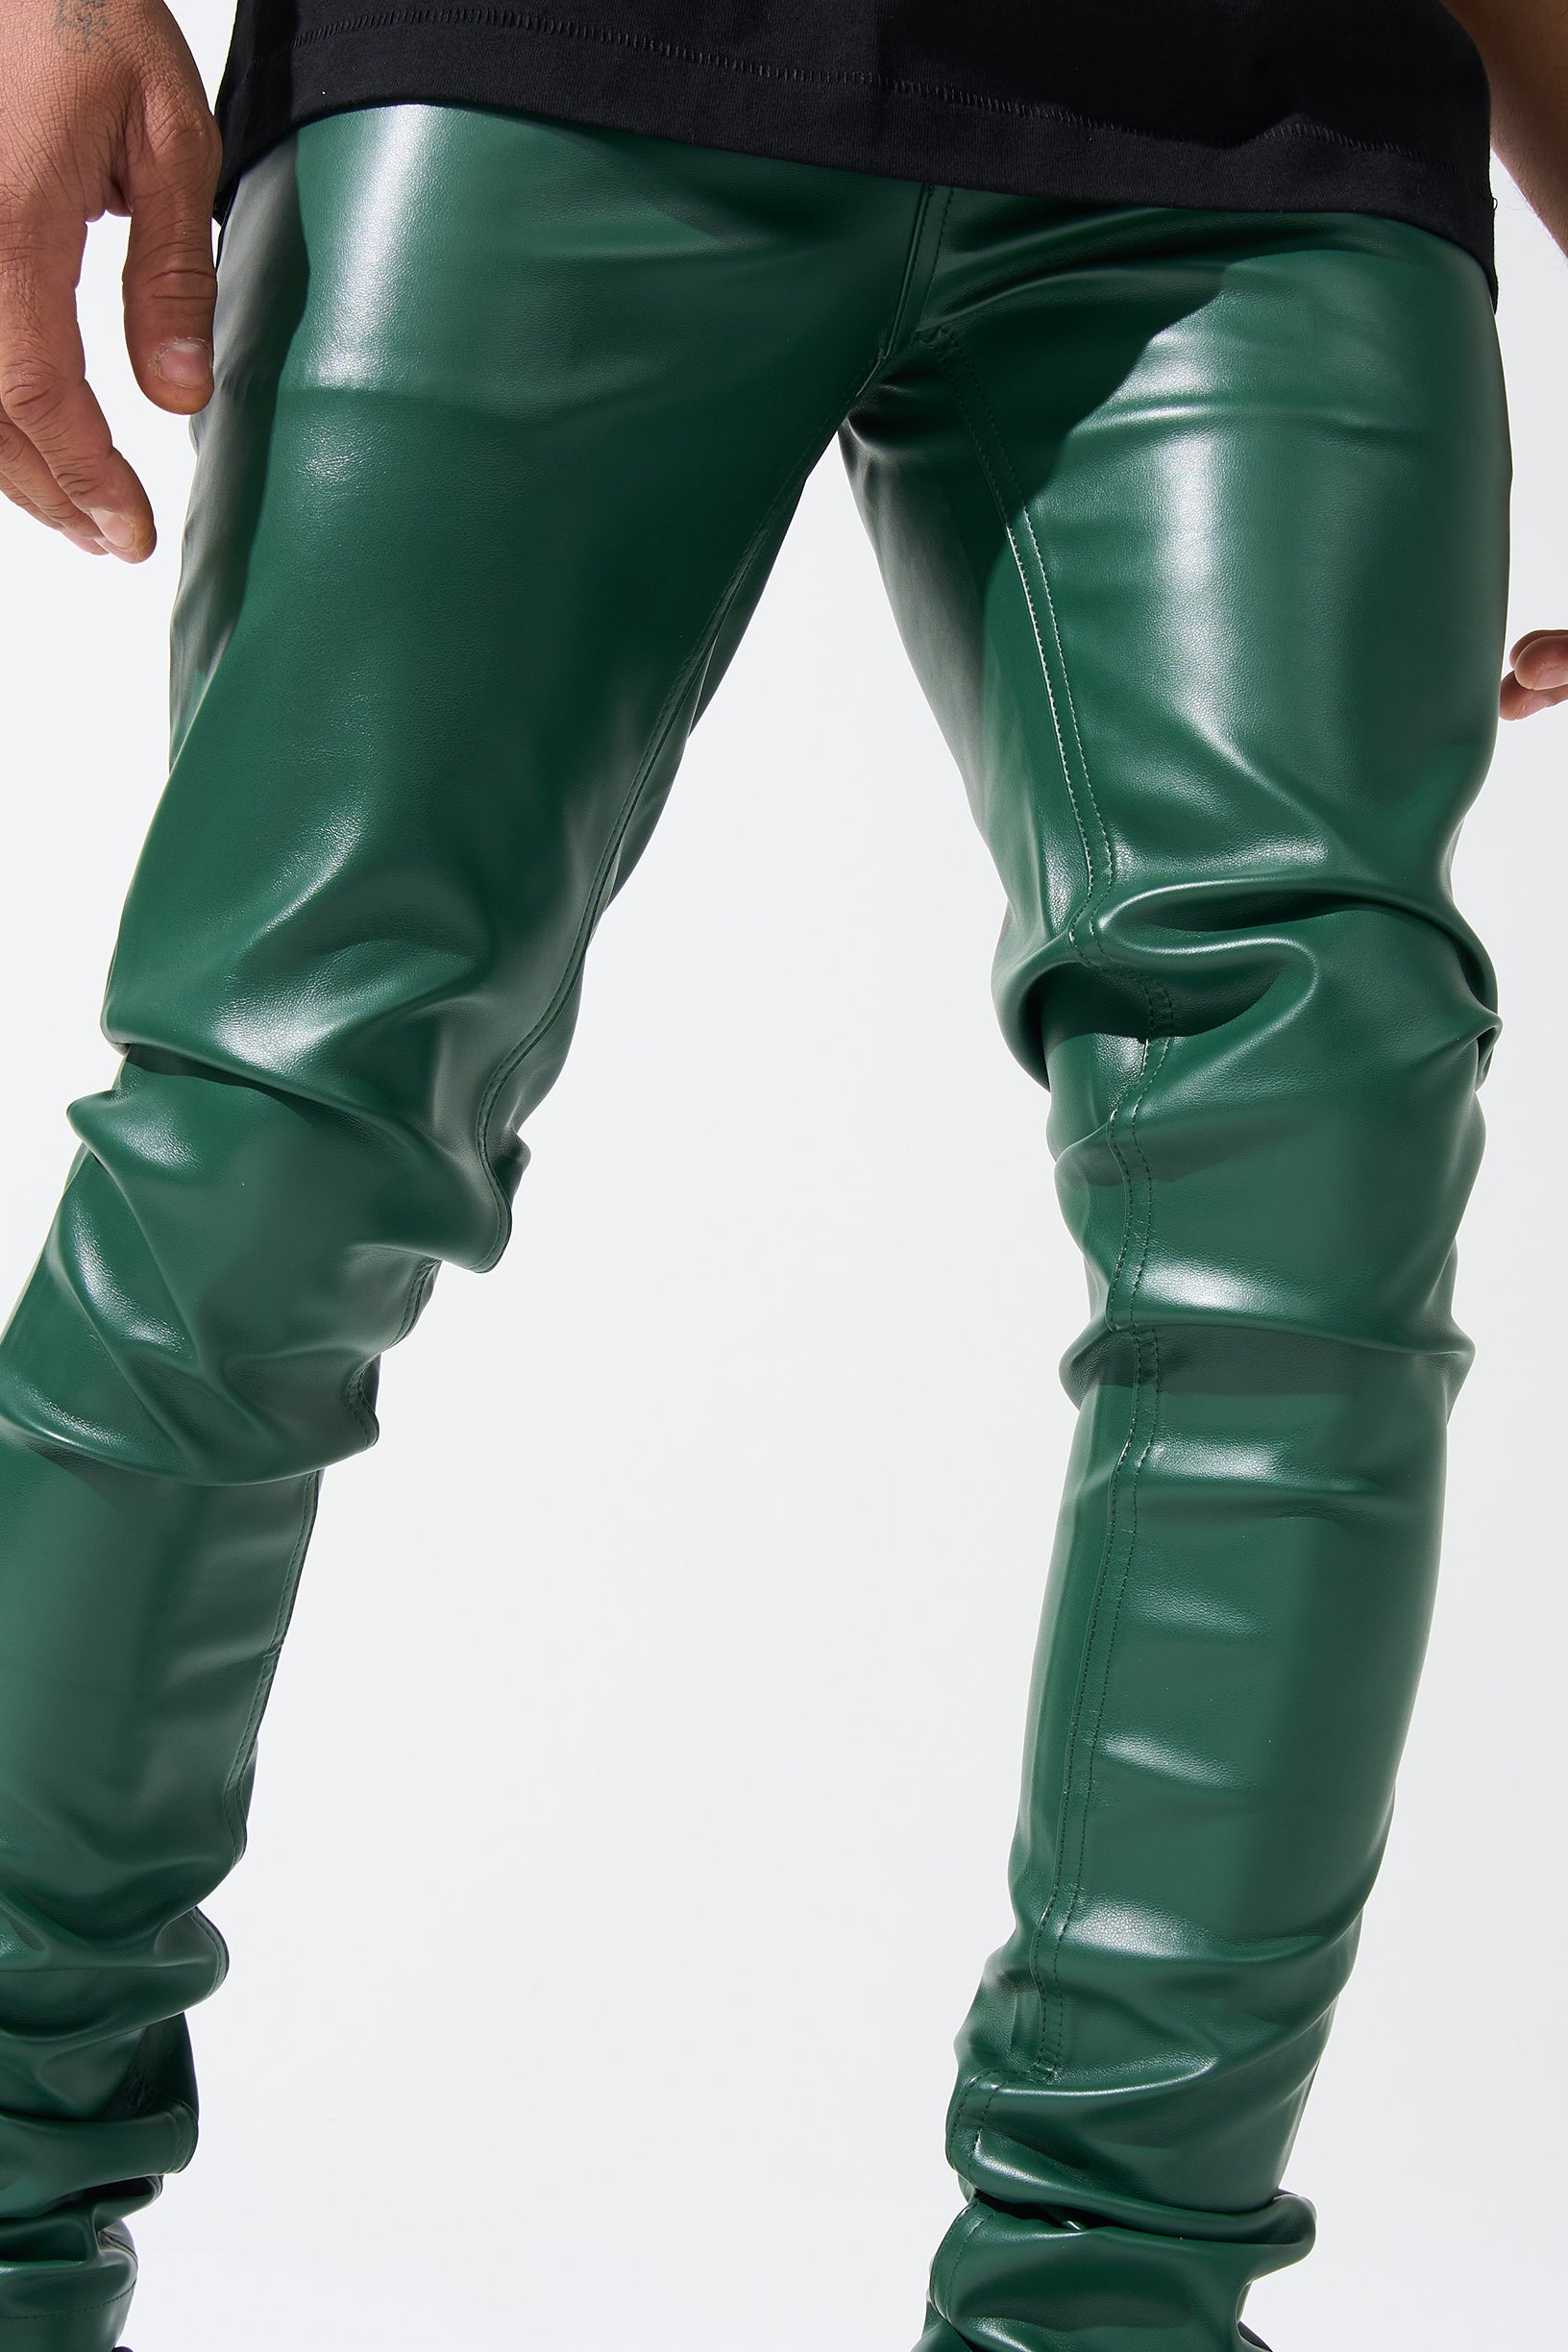 ASOS DESIGN faux leather pants in dark green | ASOS